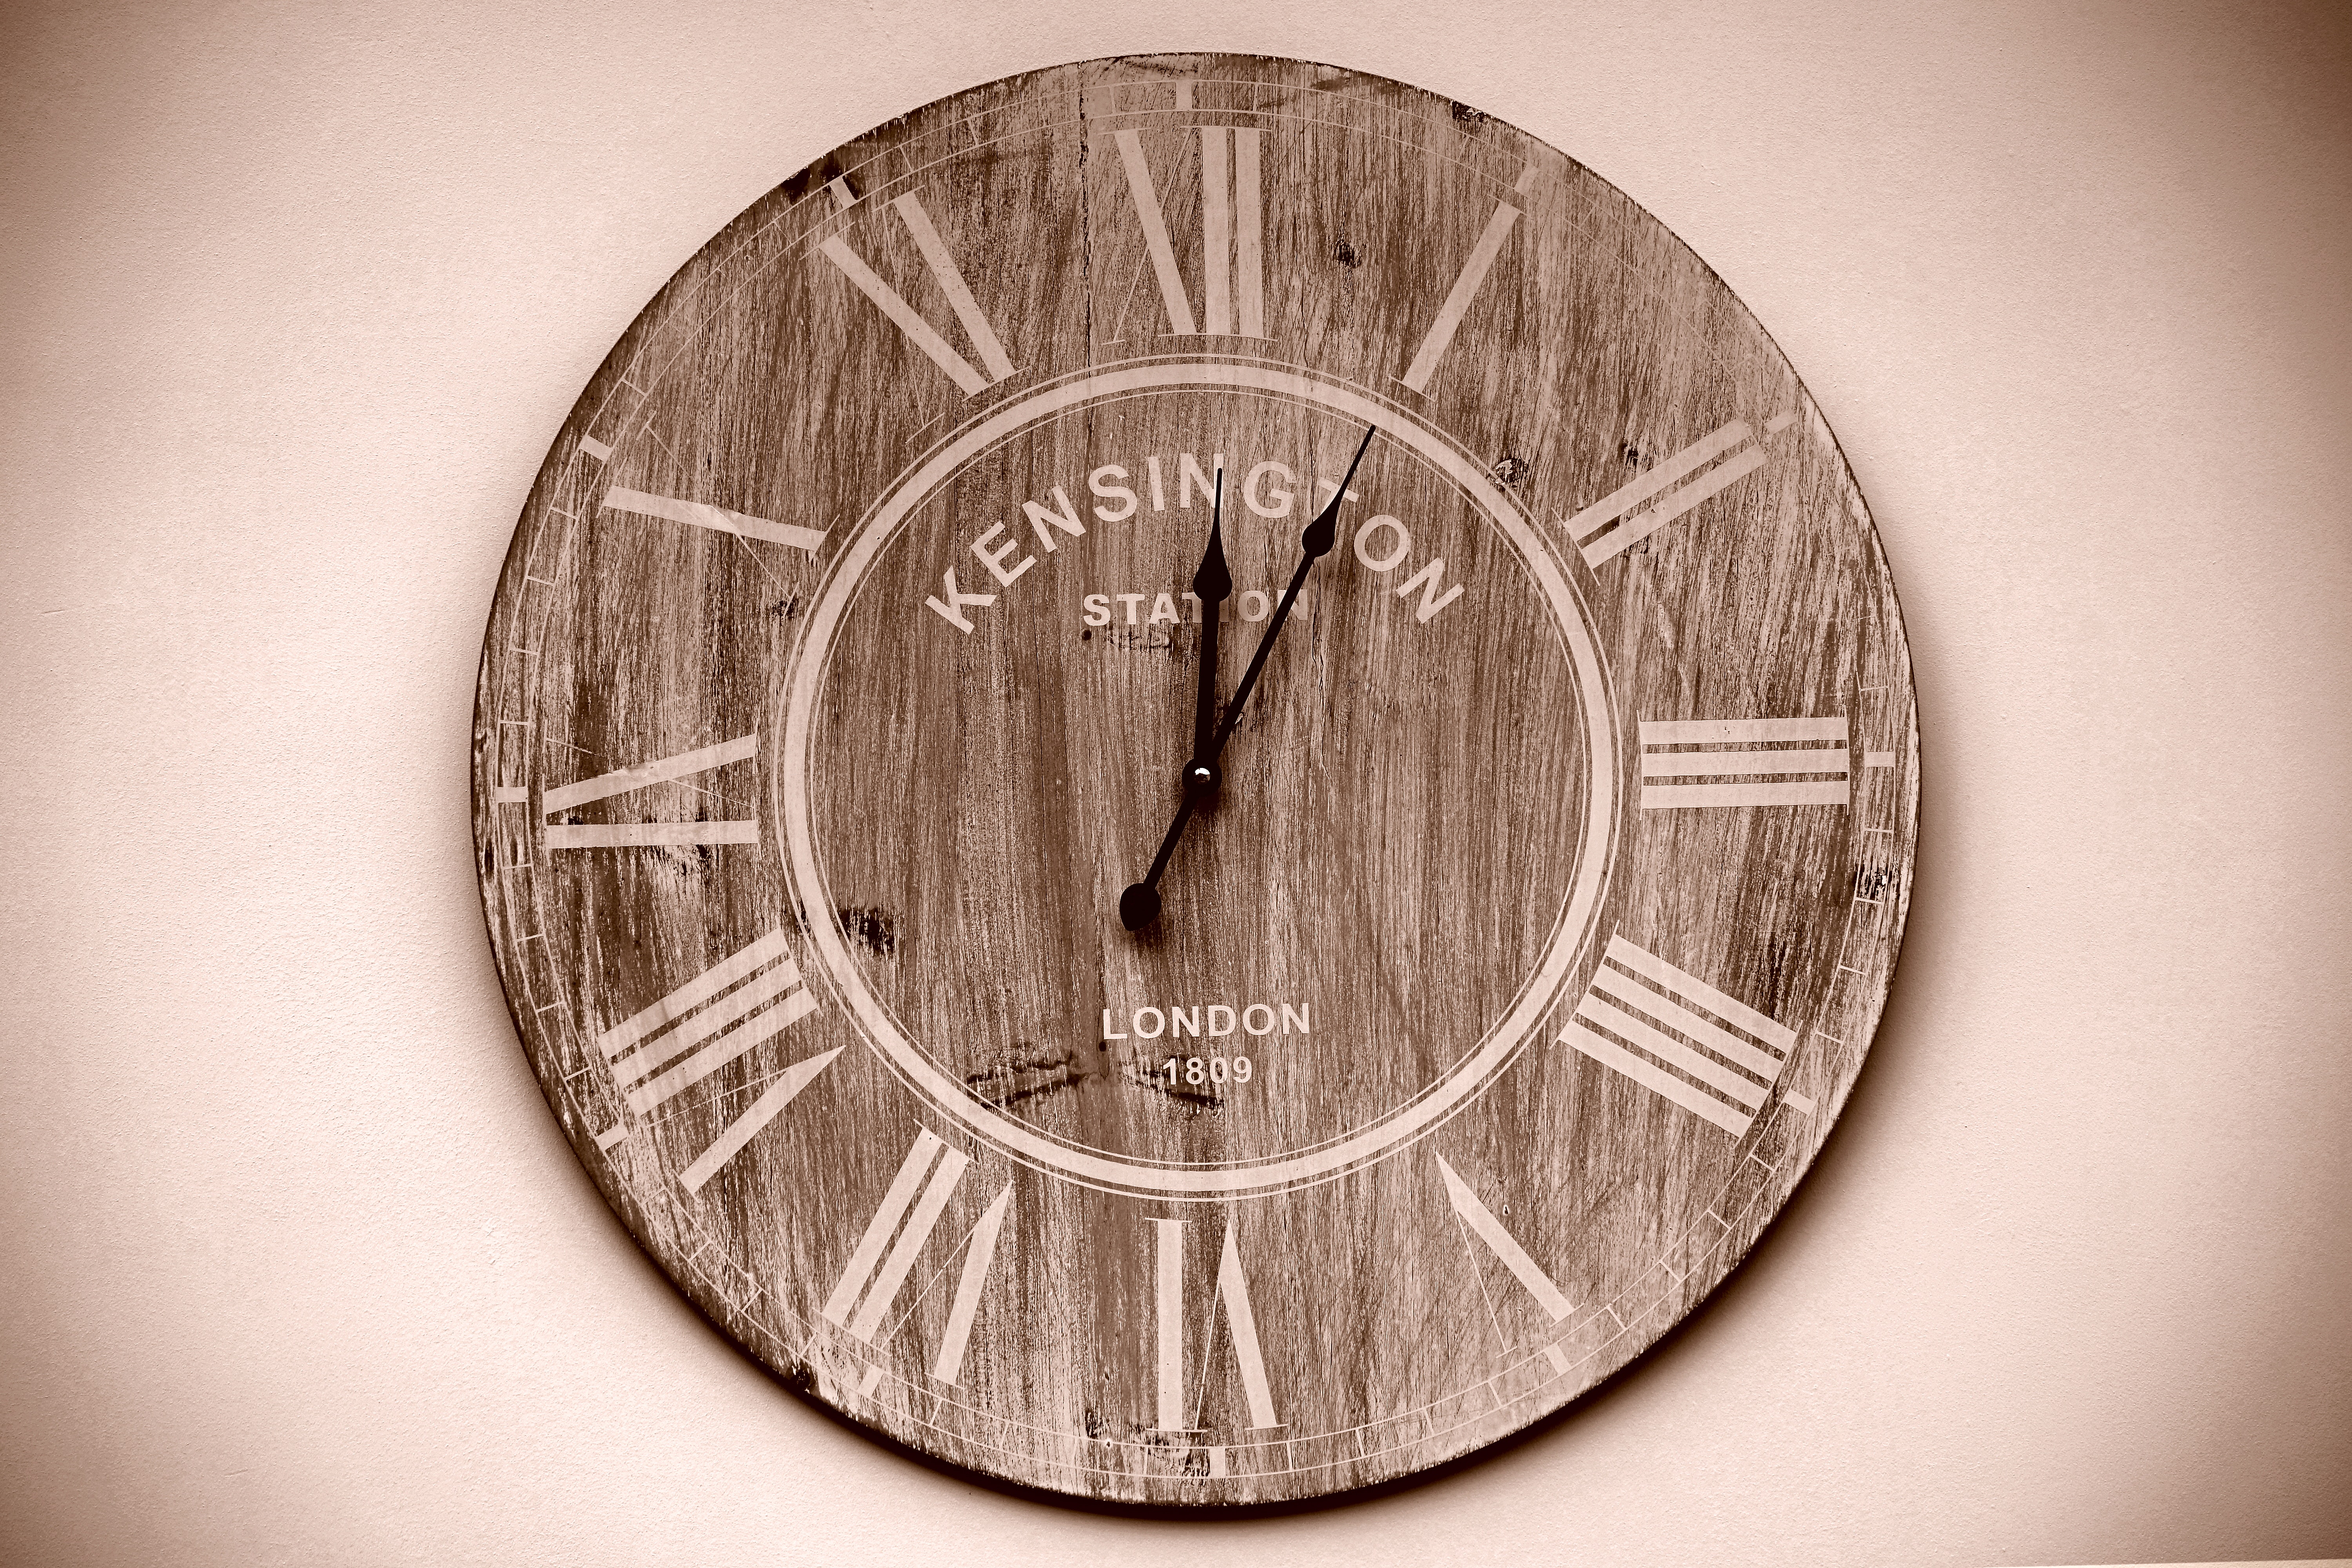 Kensington brown round wall analog clock photo